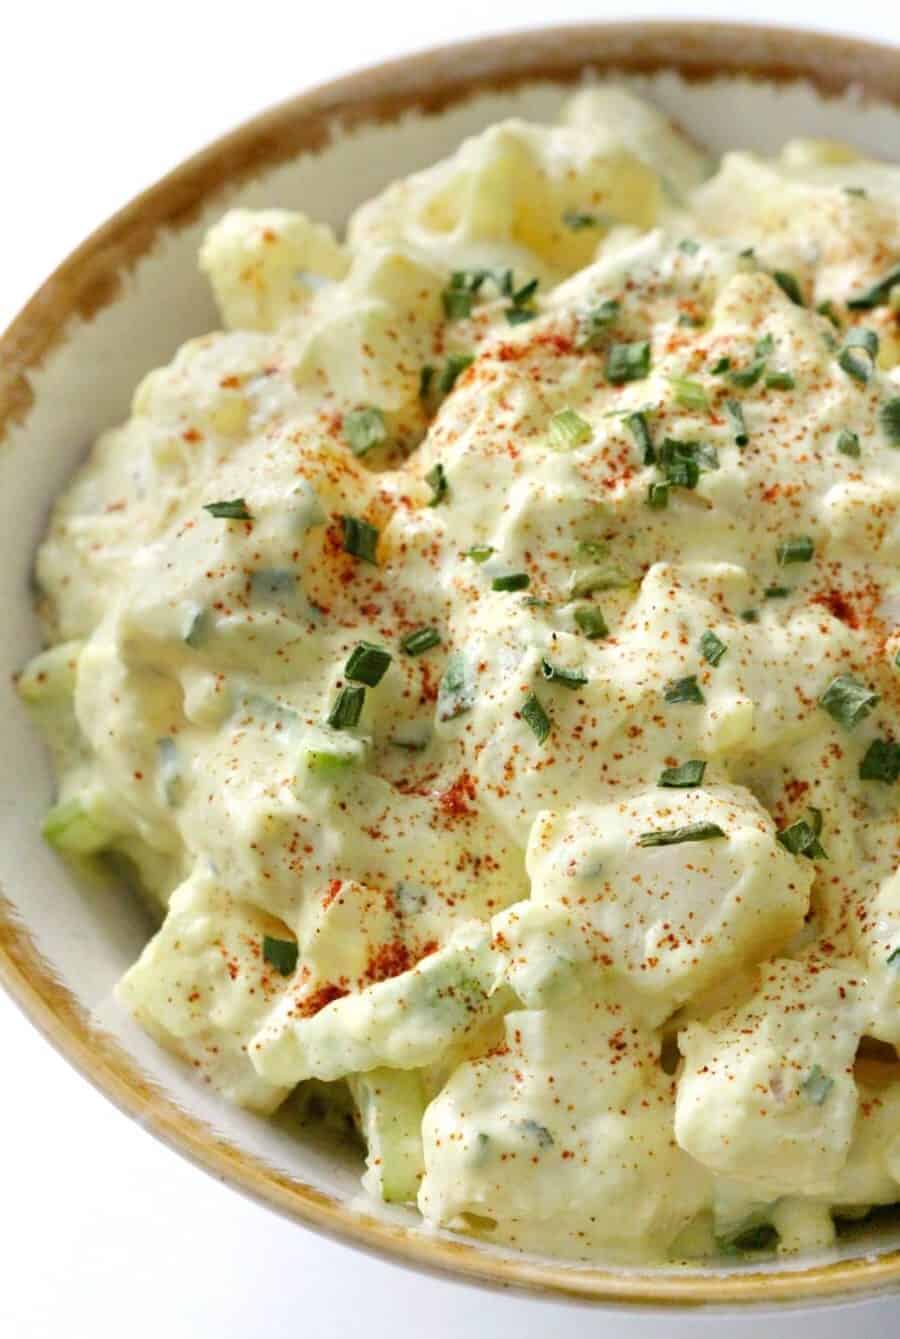 close-up of vegan southern potato salad in bowl.
